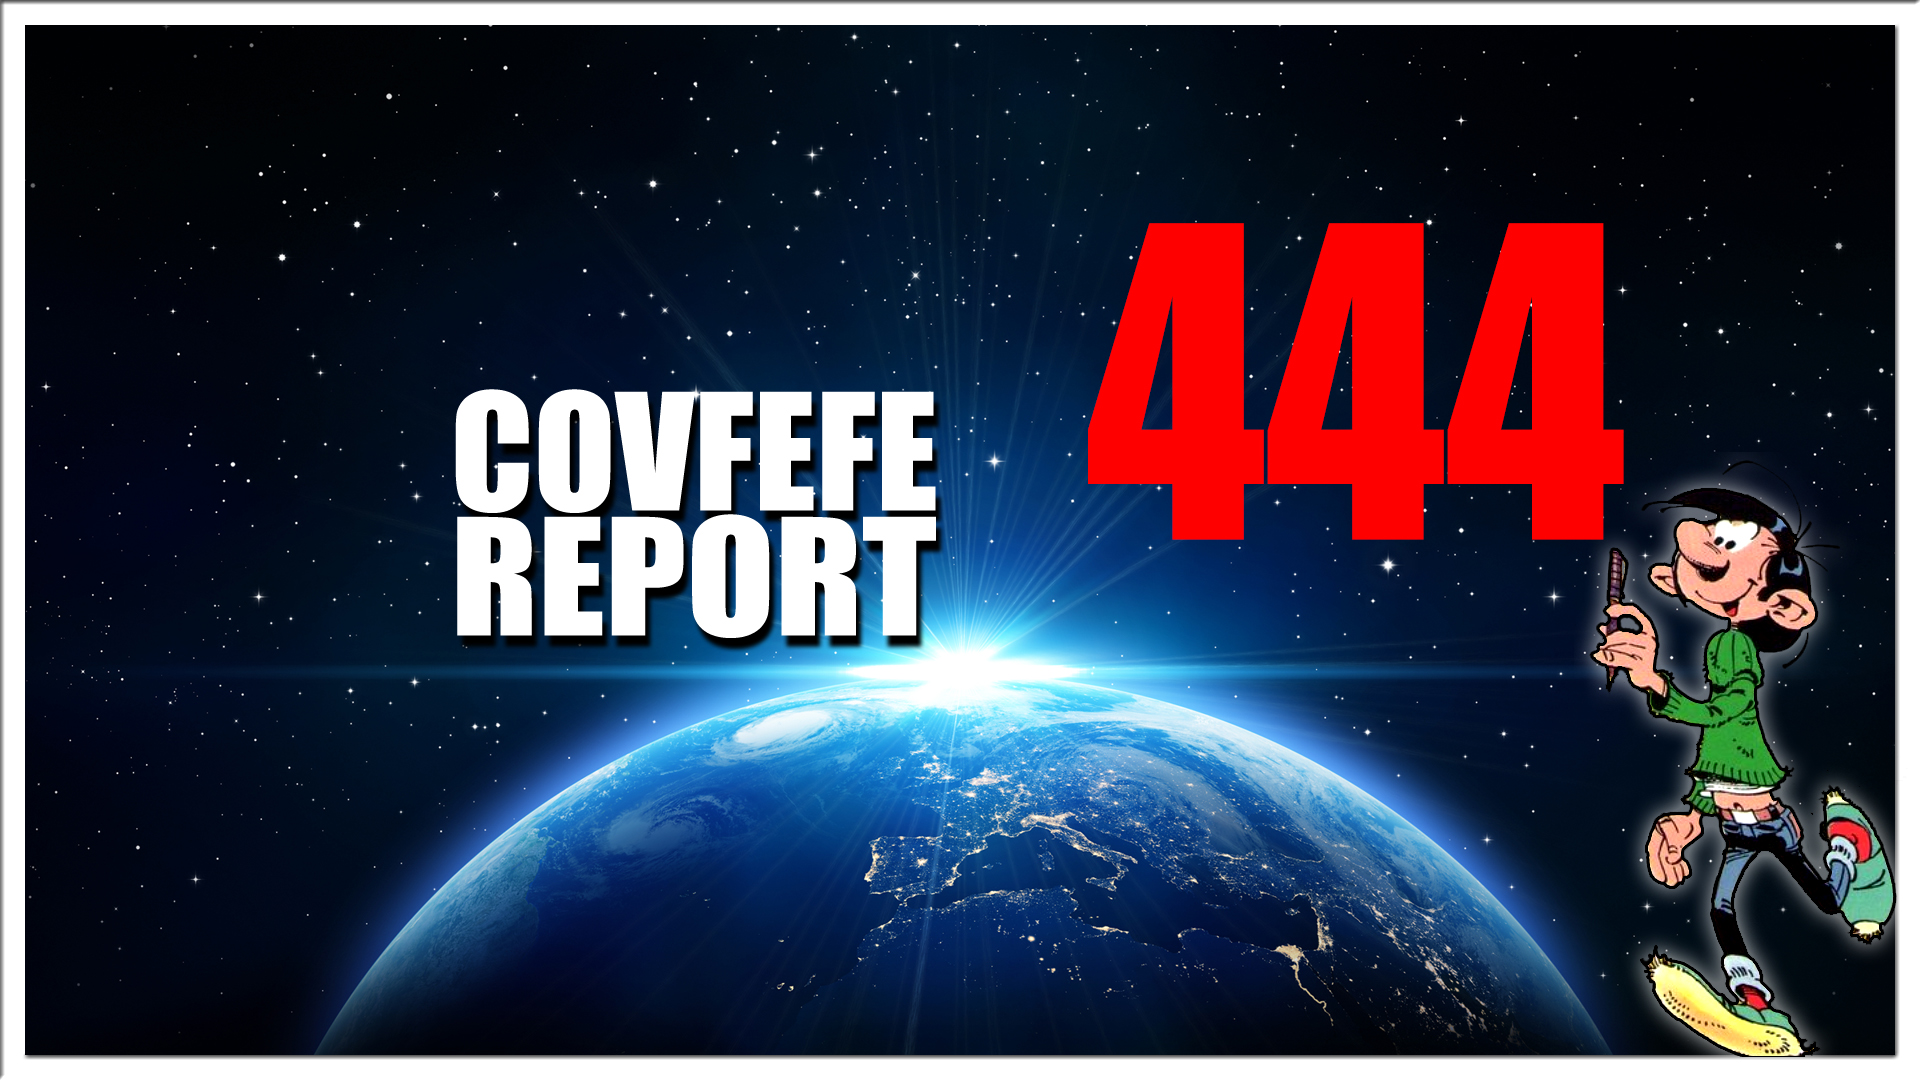 Covfefe Report 444. Alles komt naar buiten, AZ Audit, Hillary is Killary?,Operatie Looking Glass